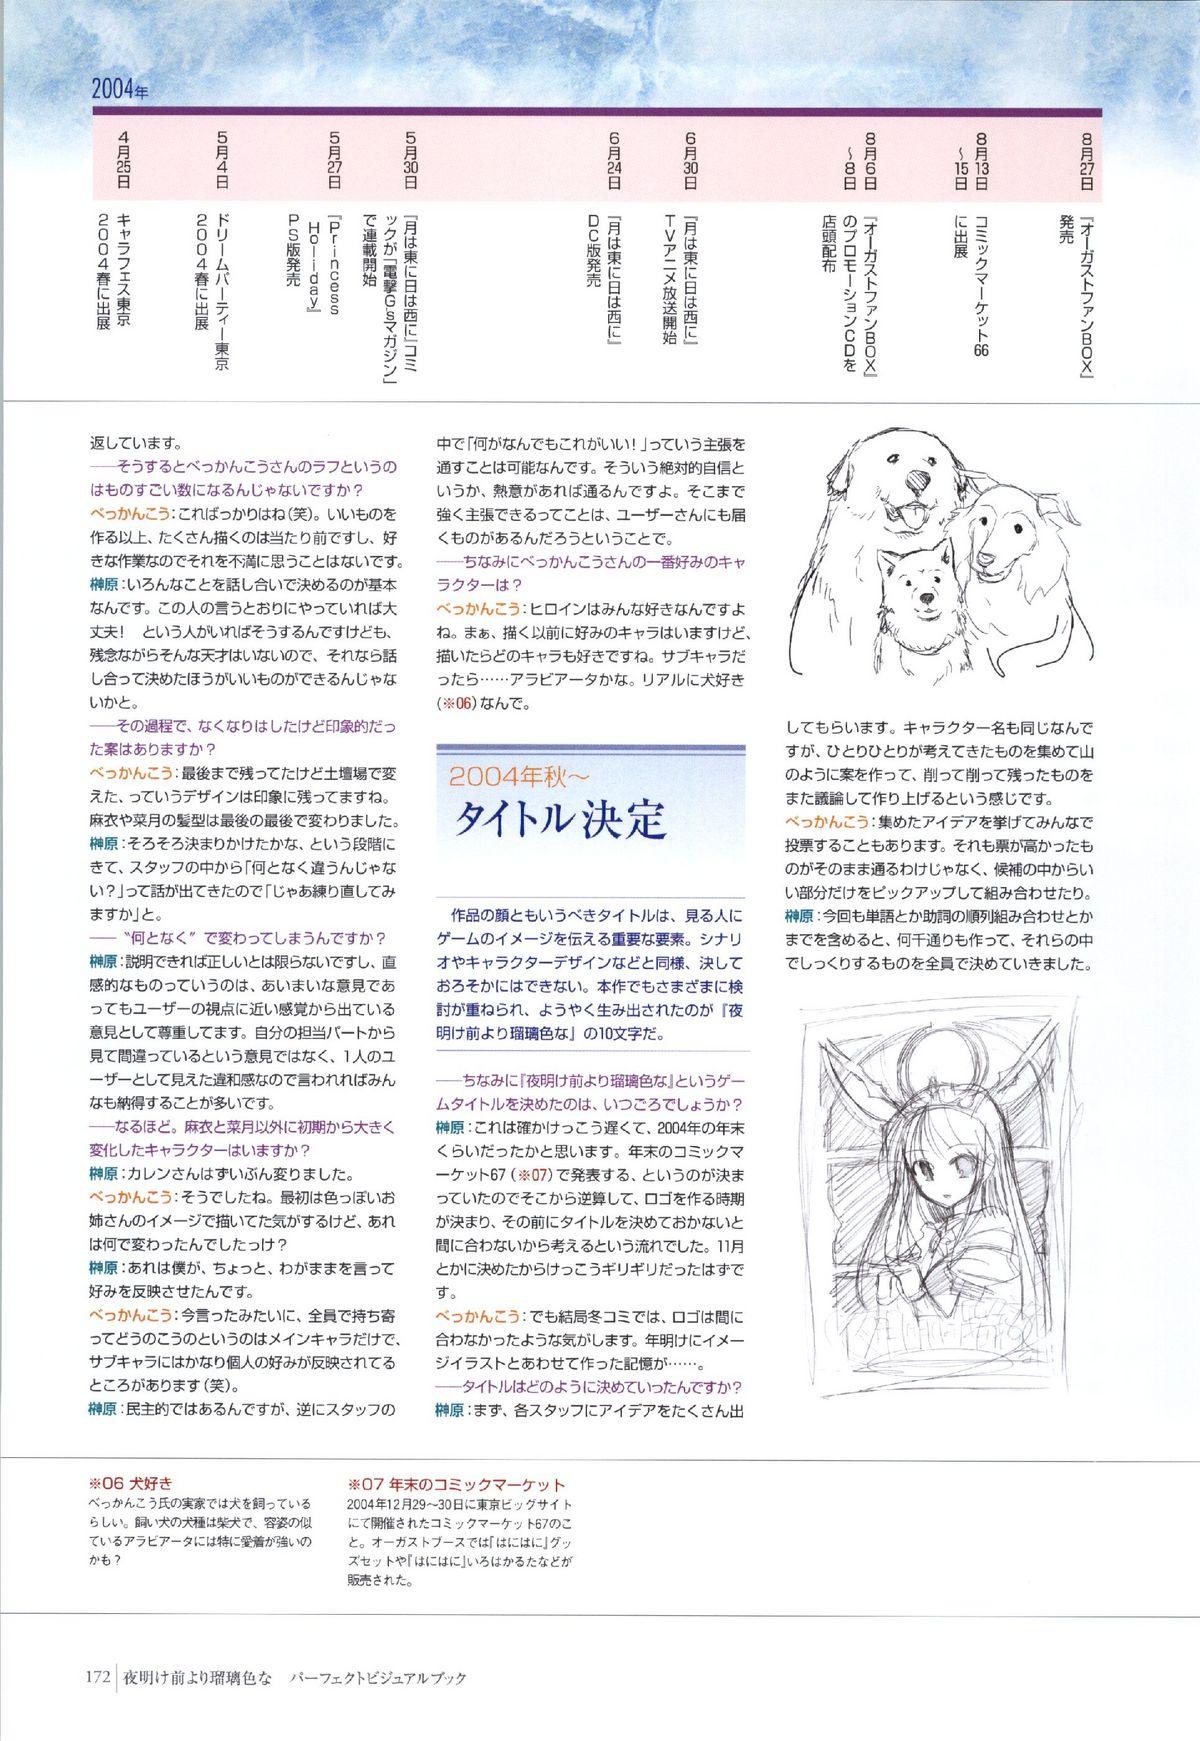 Yoake Mae Yori Ruri Iro Na ( Crescent Love ) Perfect Visual Book 168